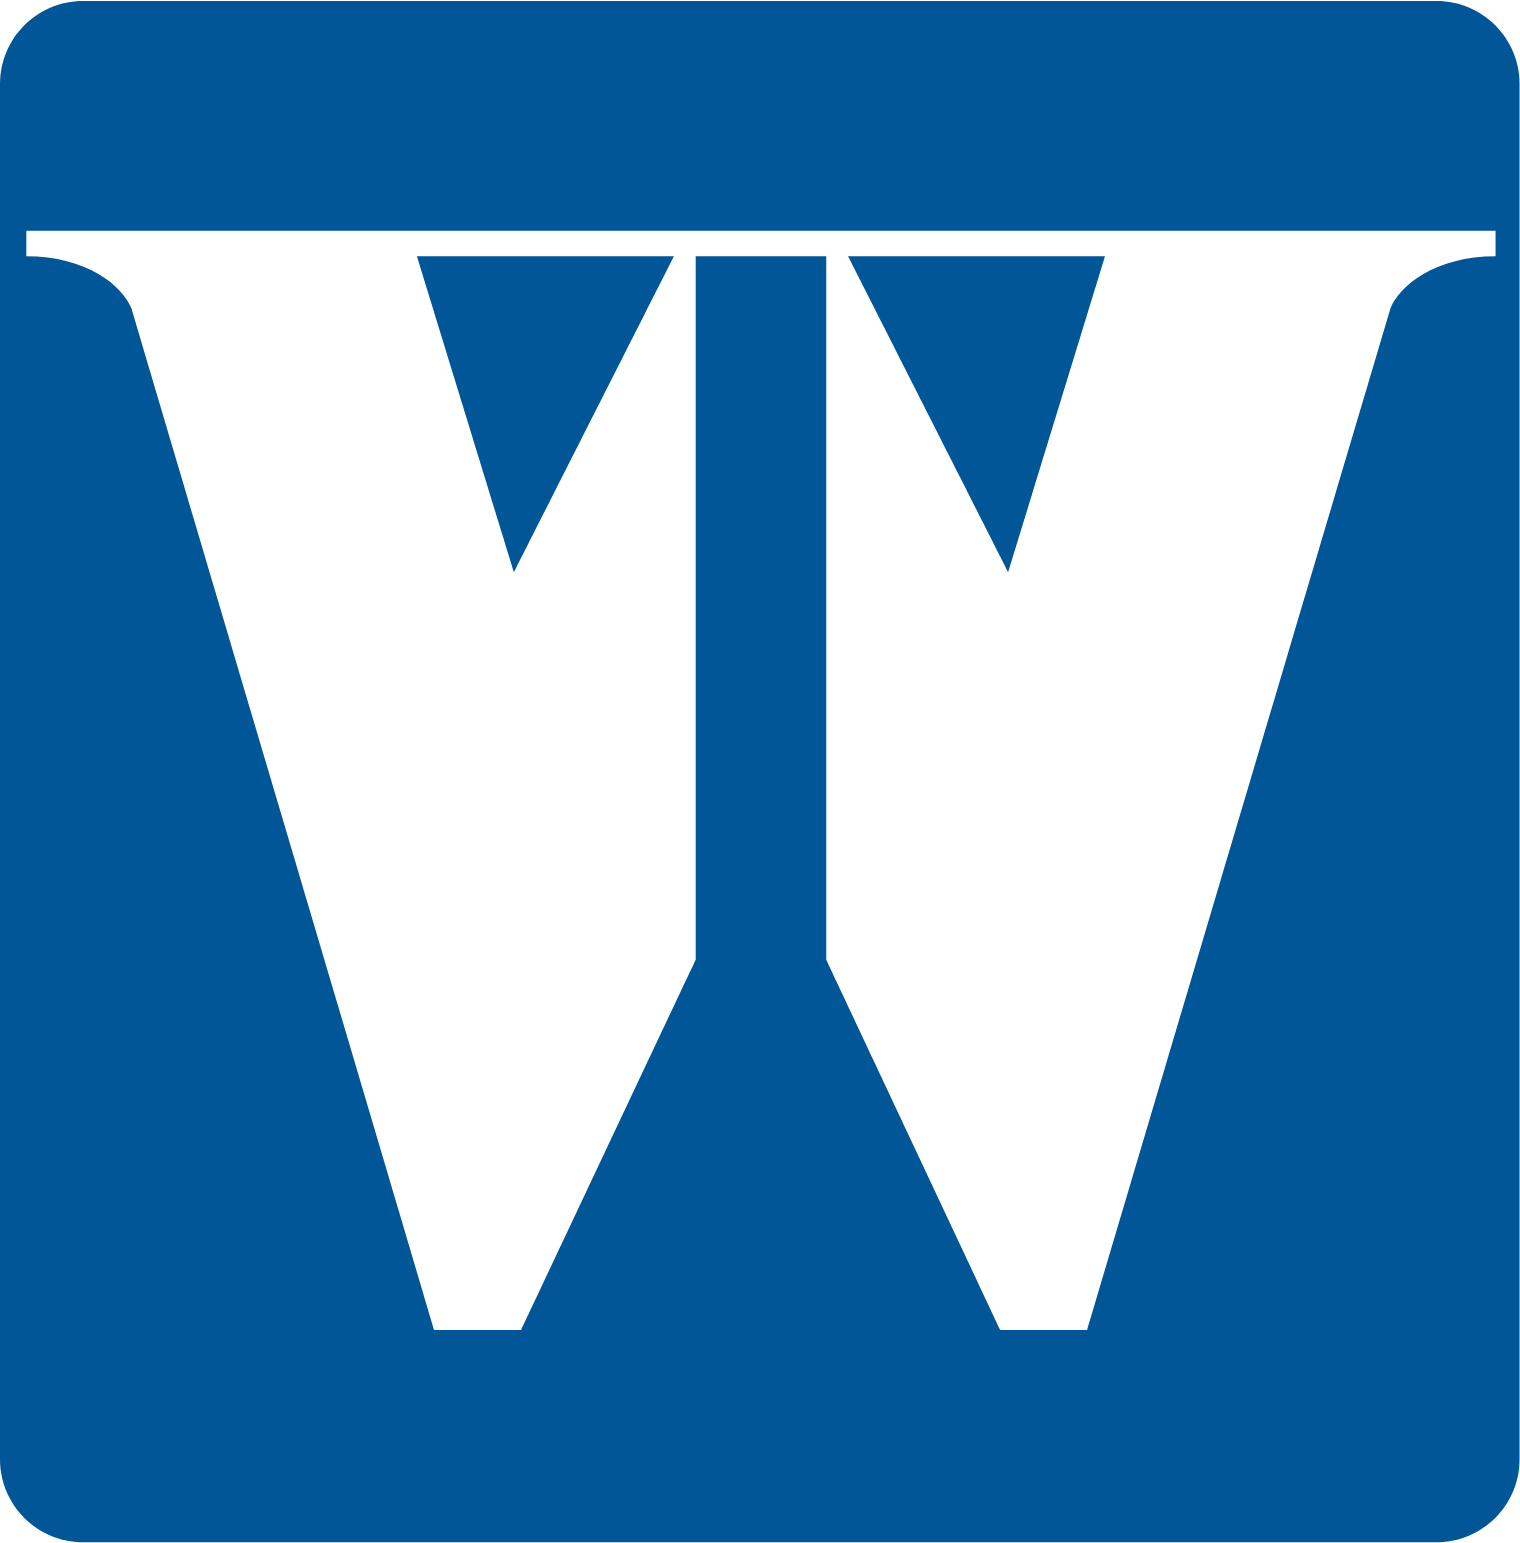 Washington Trust Bancorp logo (PNG transparent)